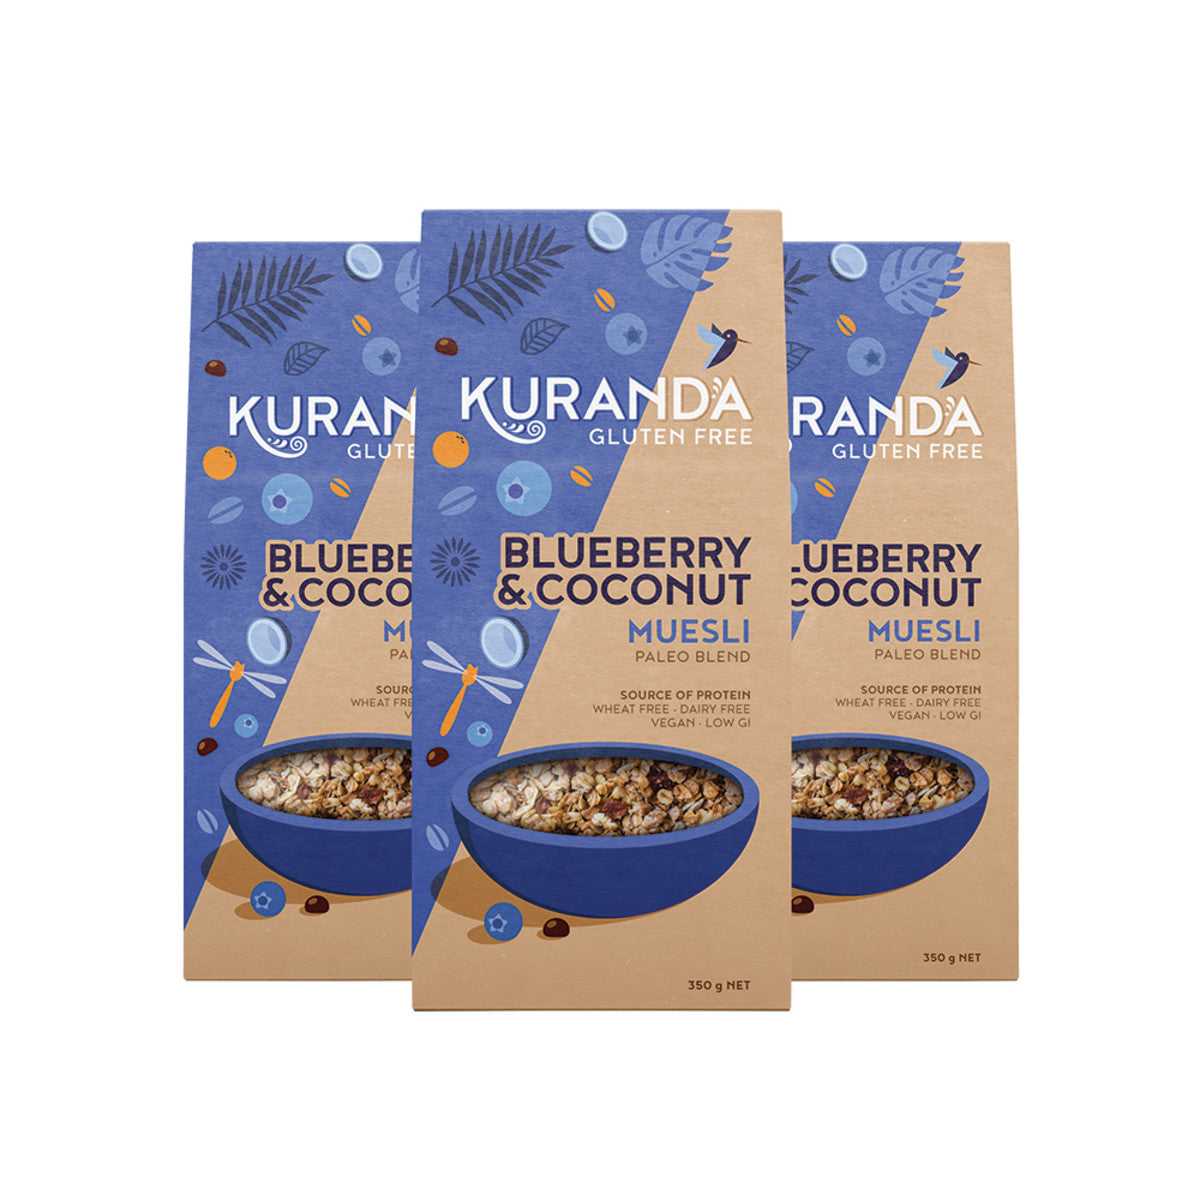 Kuranda - Gluten Free Muesli Blueberry Coconut (Paleo Blend)